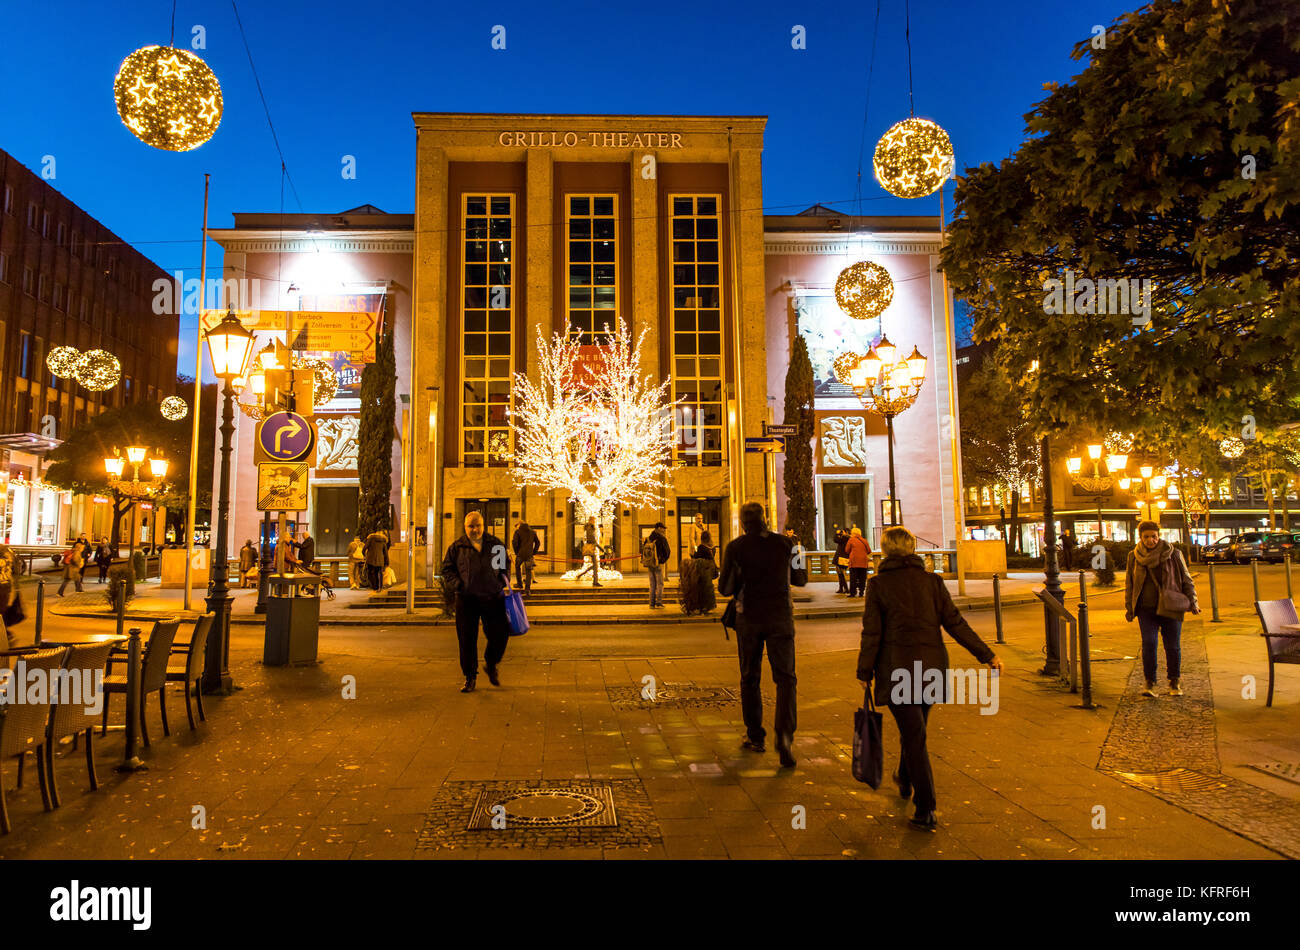 Illuminated facade of the Grillo Theatre building, Essen, Germany, during Essen Light Festival, Stock Photo